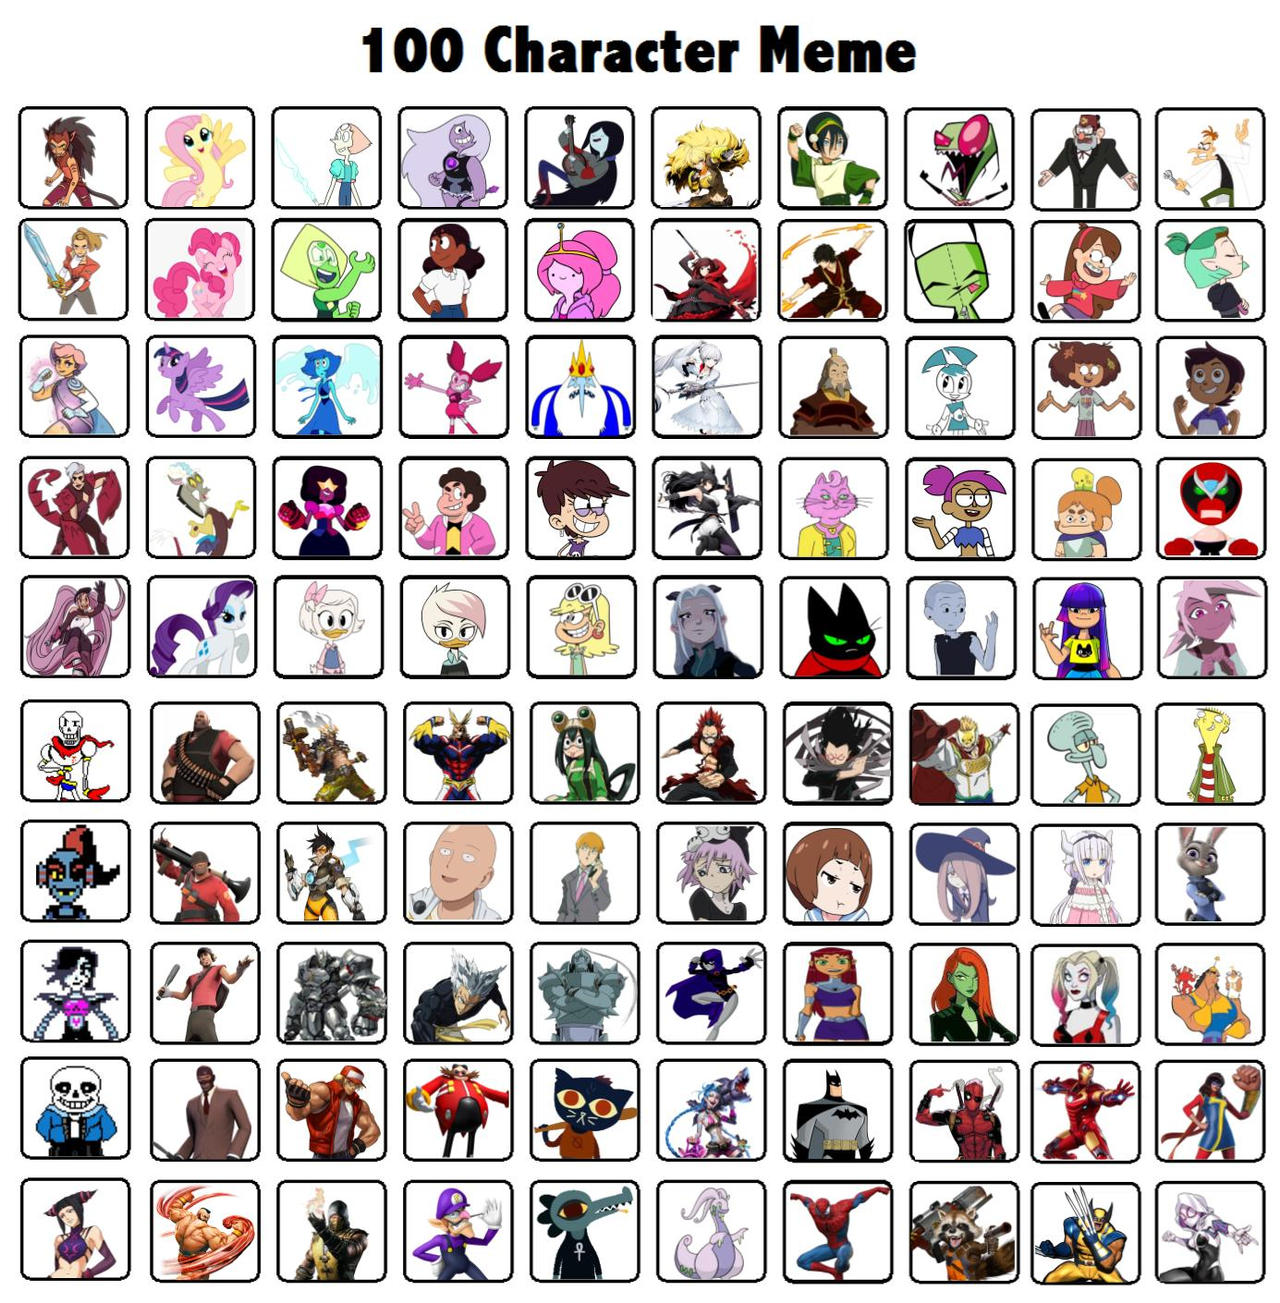 Top Ten Favorite Sonic Characters by mlp-vs-capcom on DeviantArt